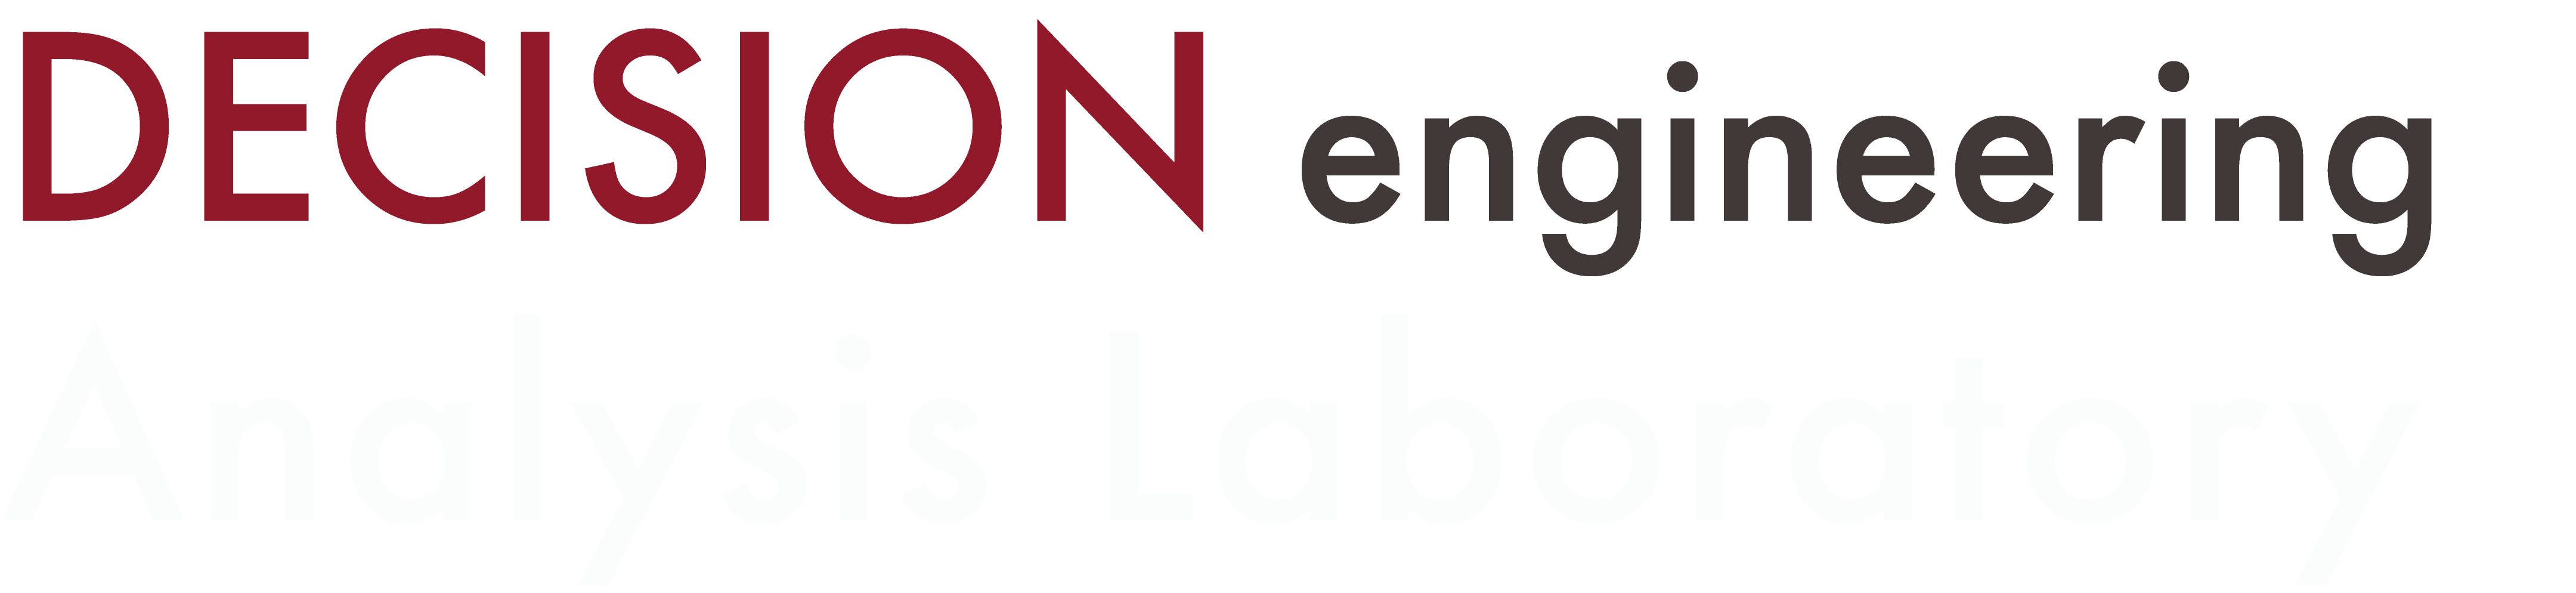 Decision Engineering Analysis Laboratory Logo